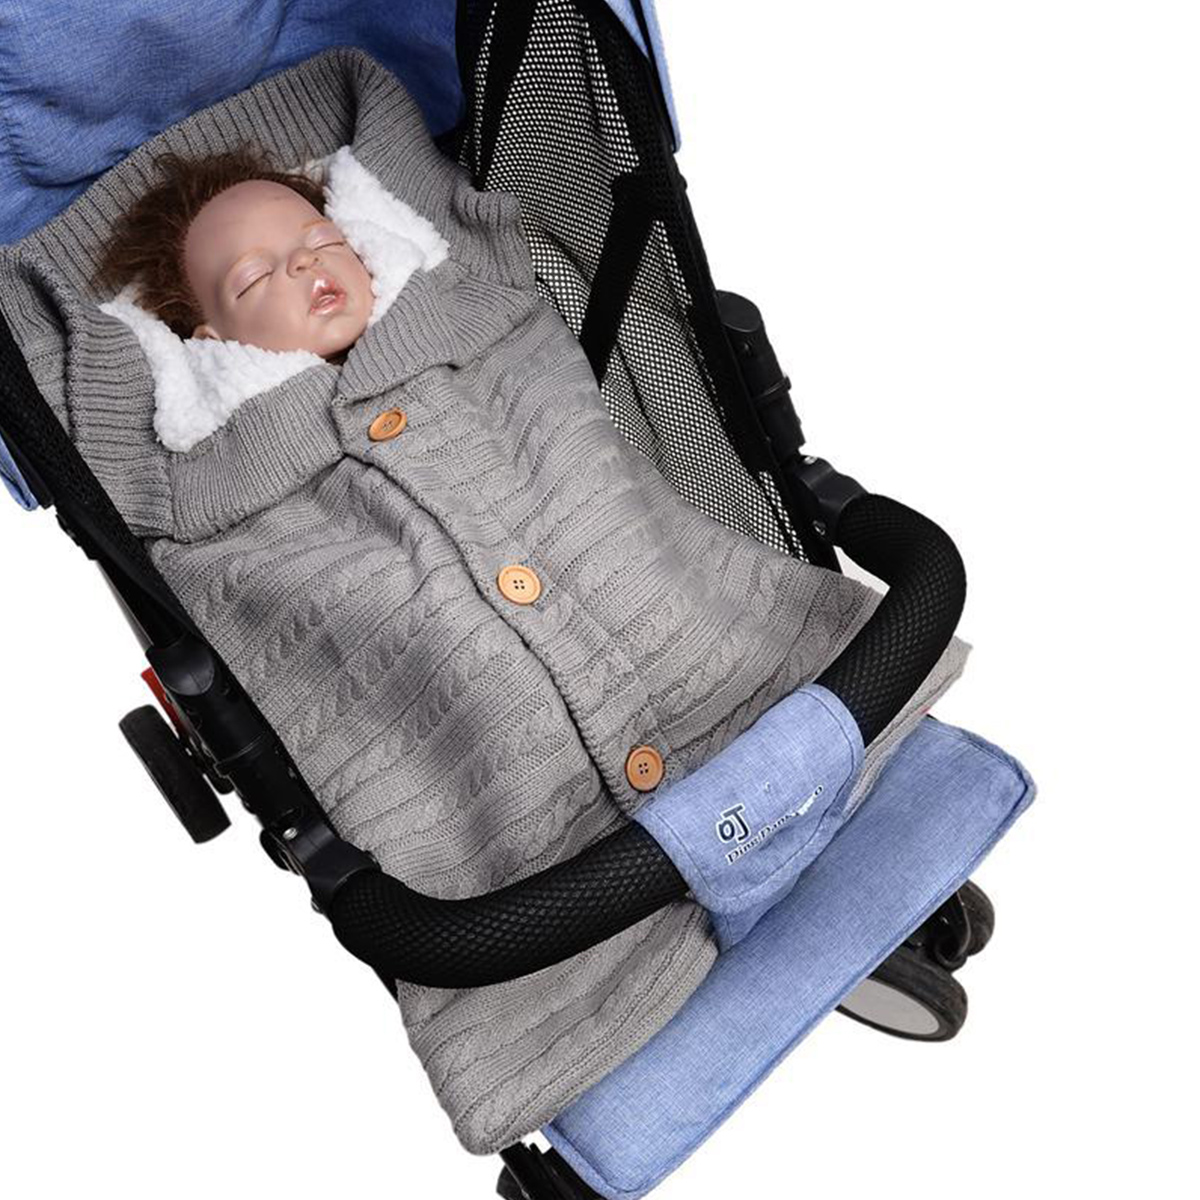 Baby-Stroller-Sleeping-Bag-Warm-Knitting-Soft-Sleeping-Blanket-Outdoor-Windproof-Cold-Proof-1698174-6